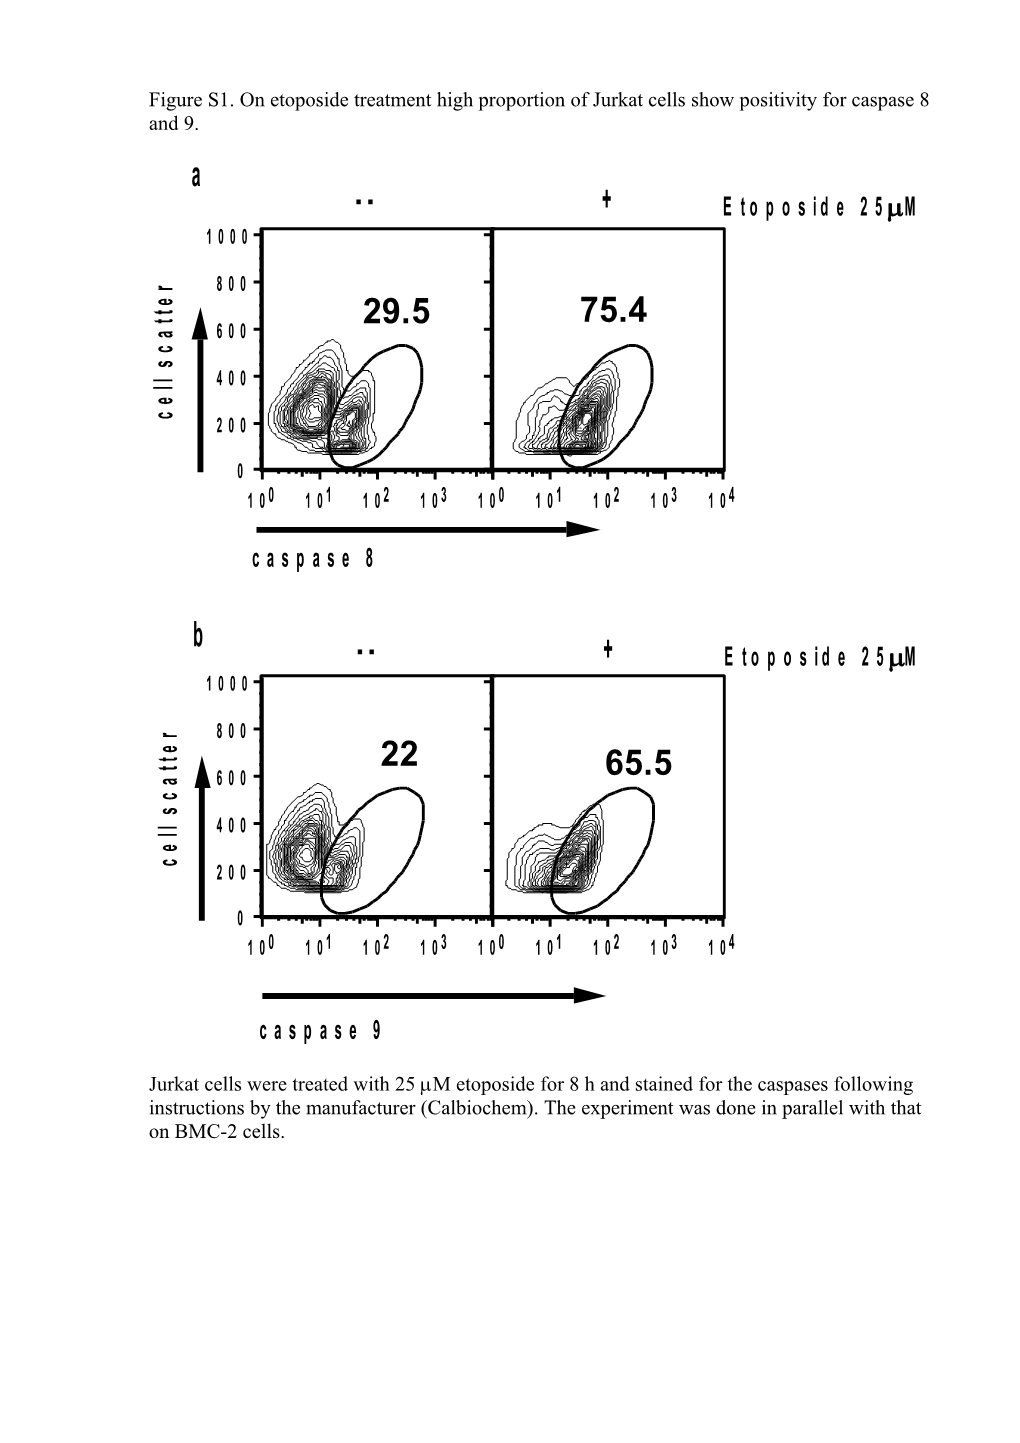 Figure S1. on Etoposide Treatment High Proportion of Jurkat Cells Show Positivity for Caspase